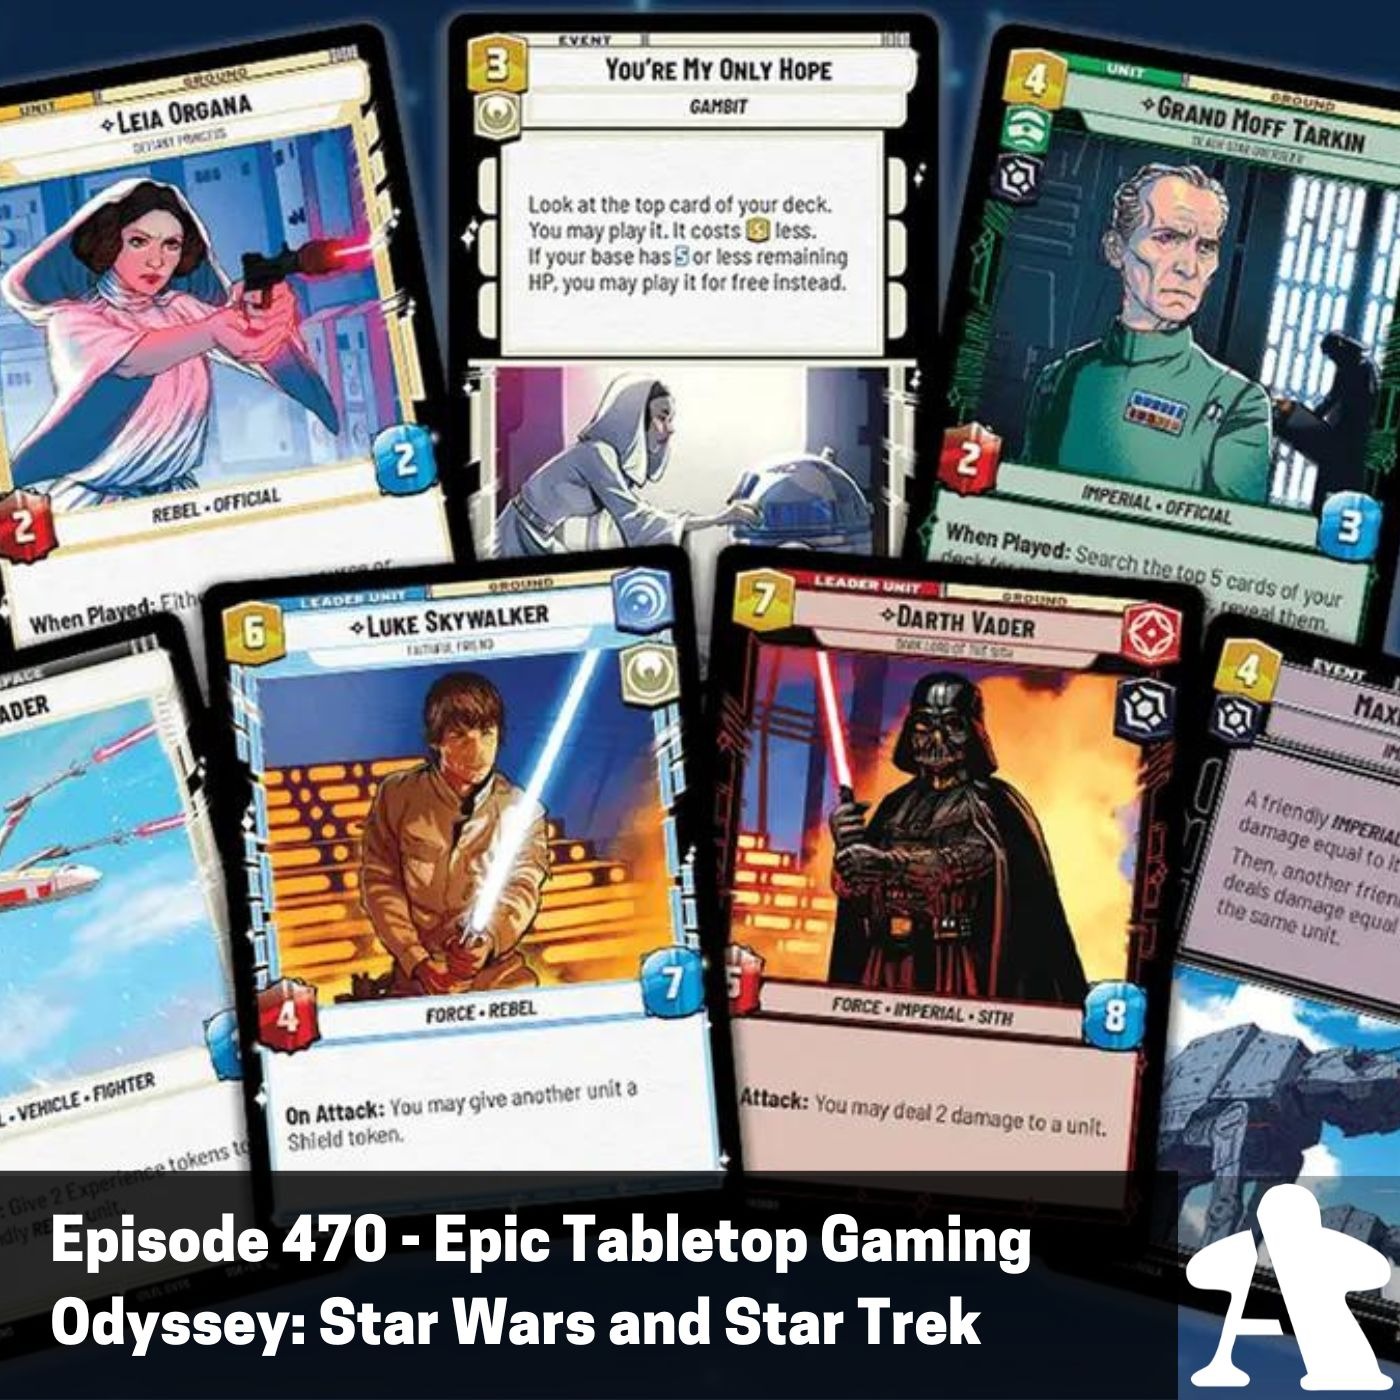 Episode 470 - Epic Tabletop Gaming Odyssey: Star Wars and Star Trek